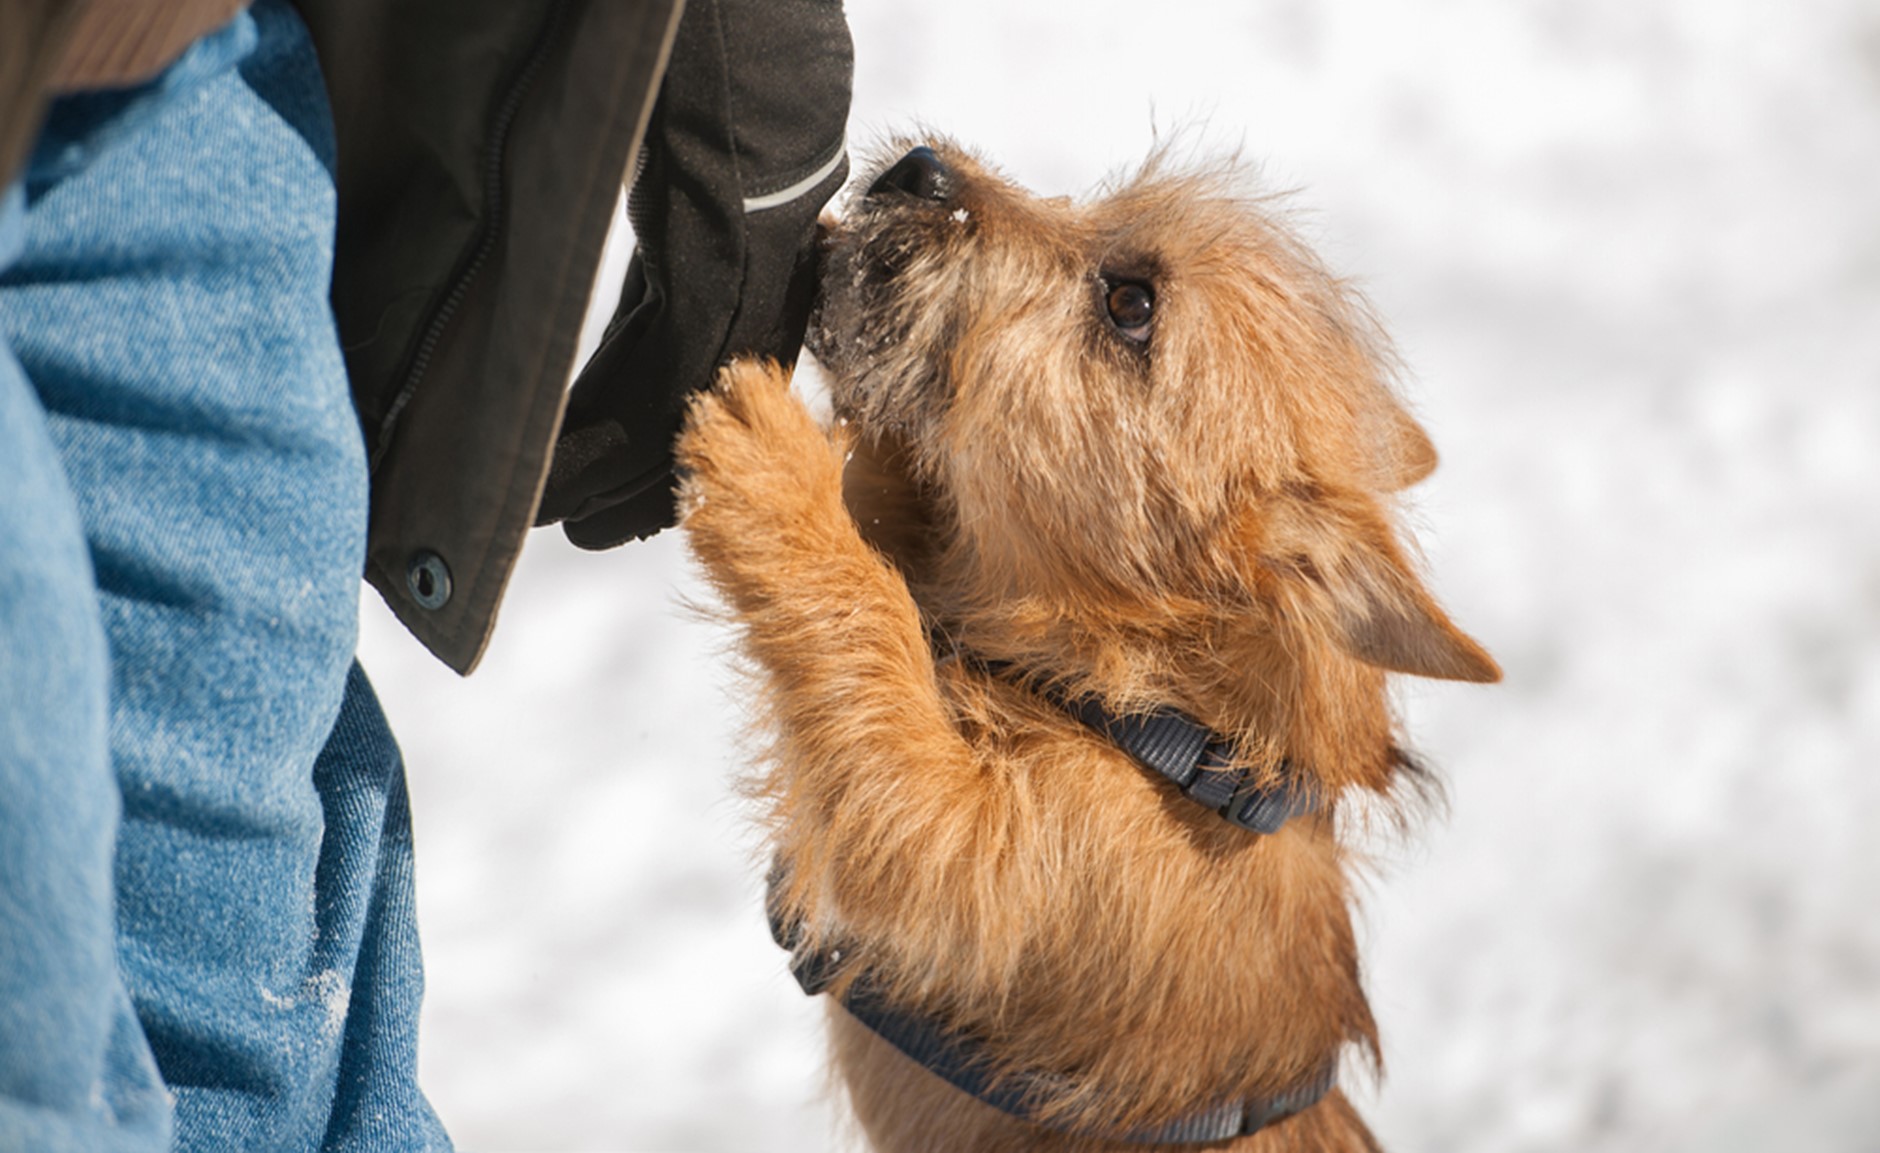 A puppy biting a coat